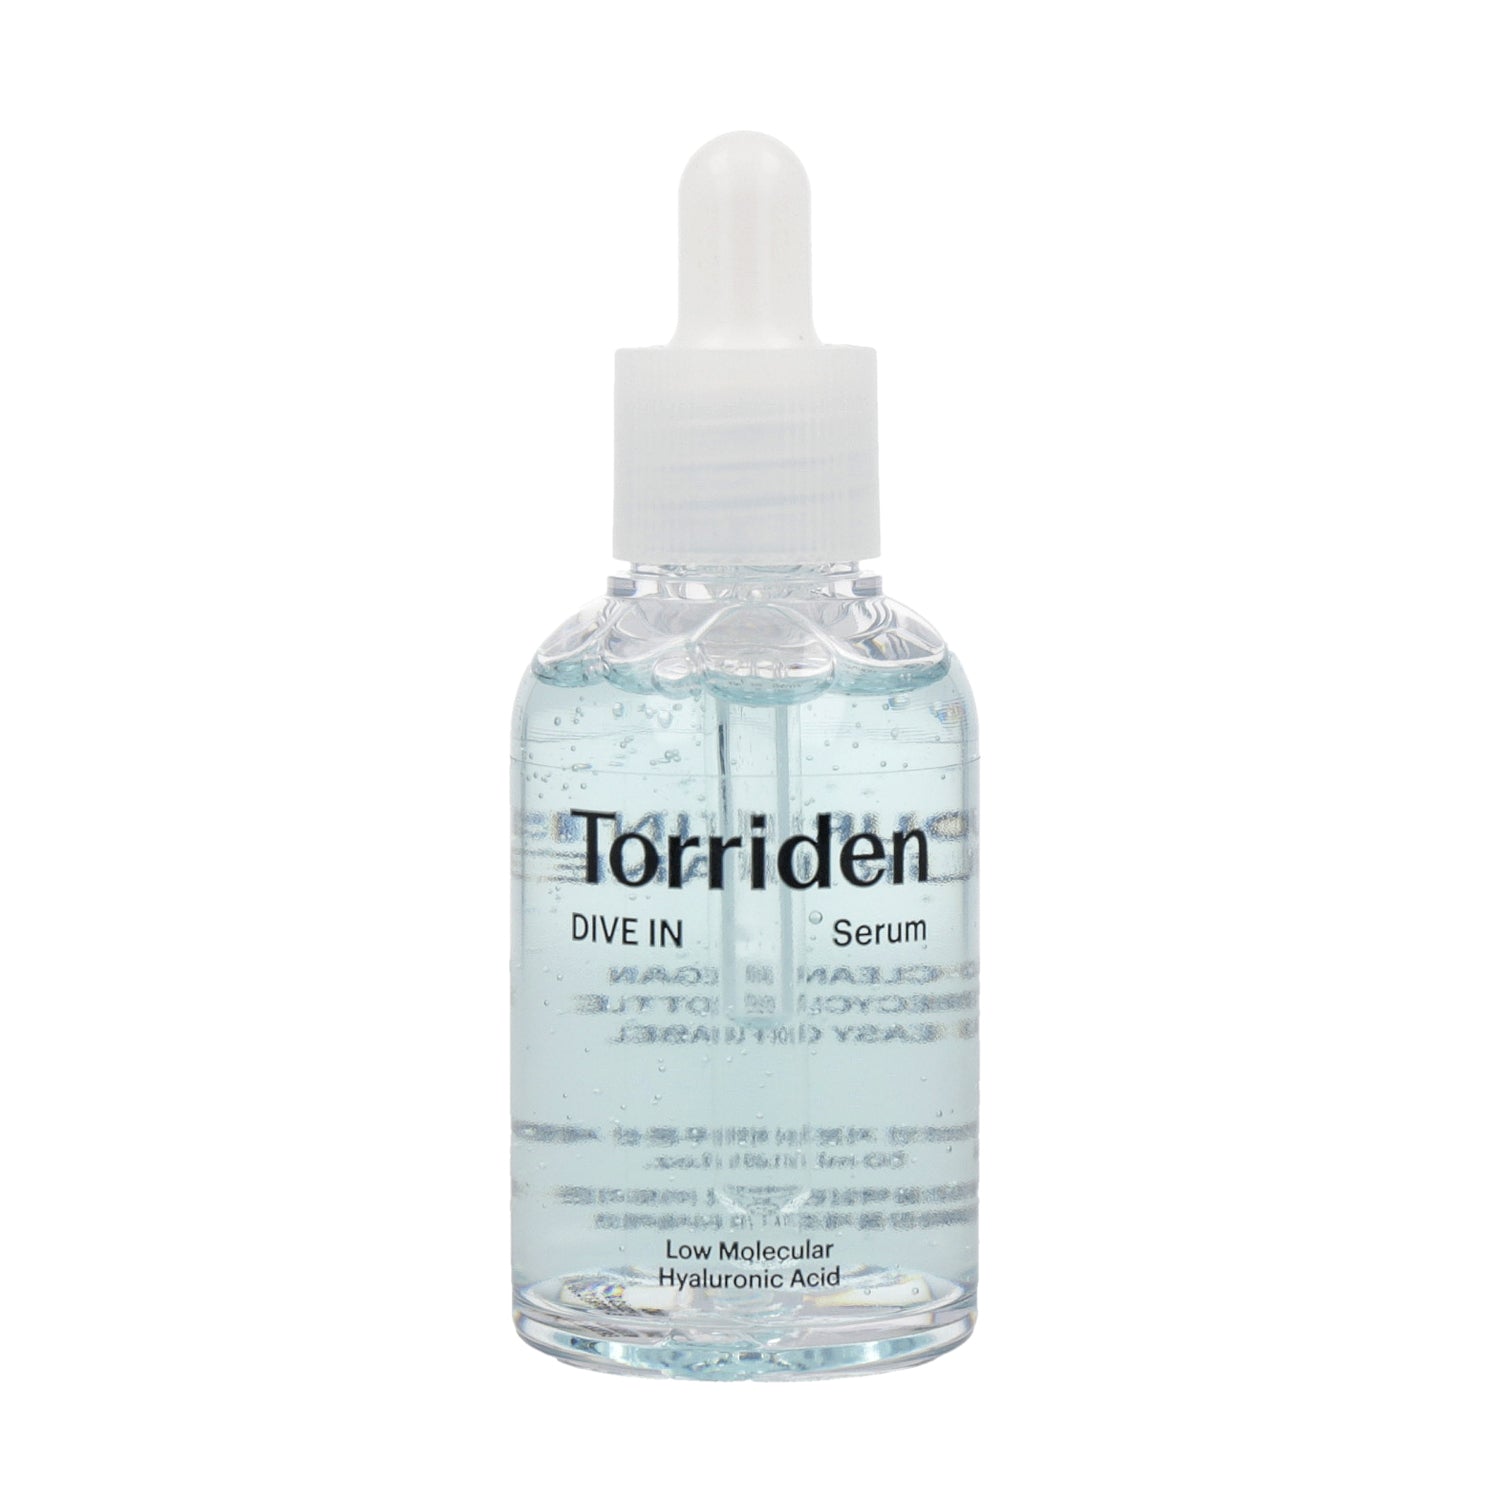 Torriden *renew* Dive-In Low Molecule Hyaluronic Acid Serum 50ml - improve skin hydration with low molecular weight hyaluronic acid